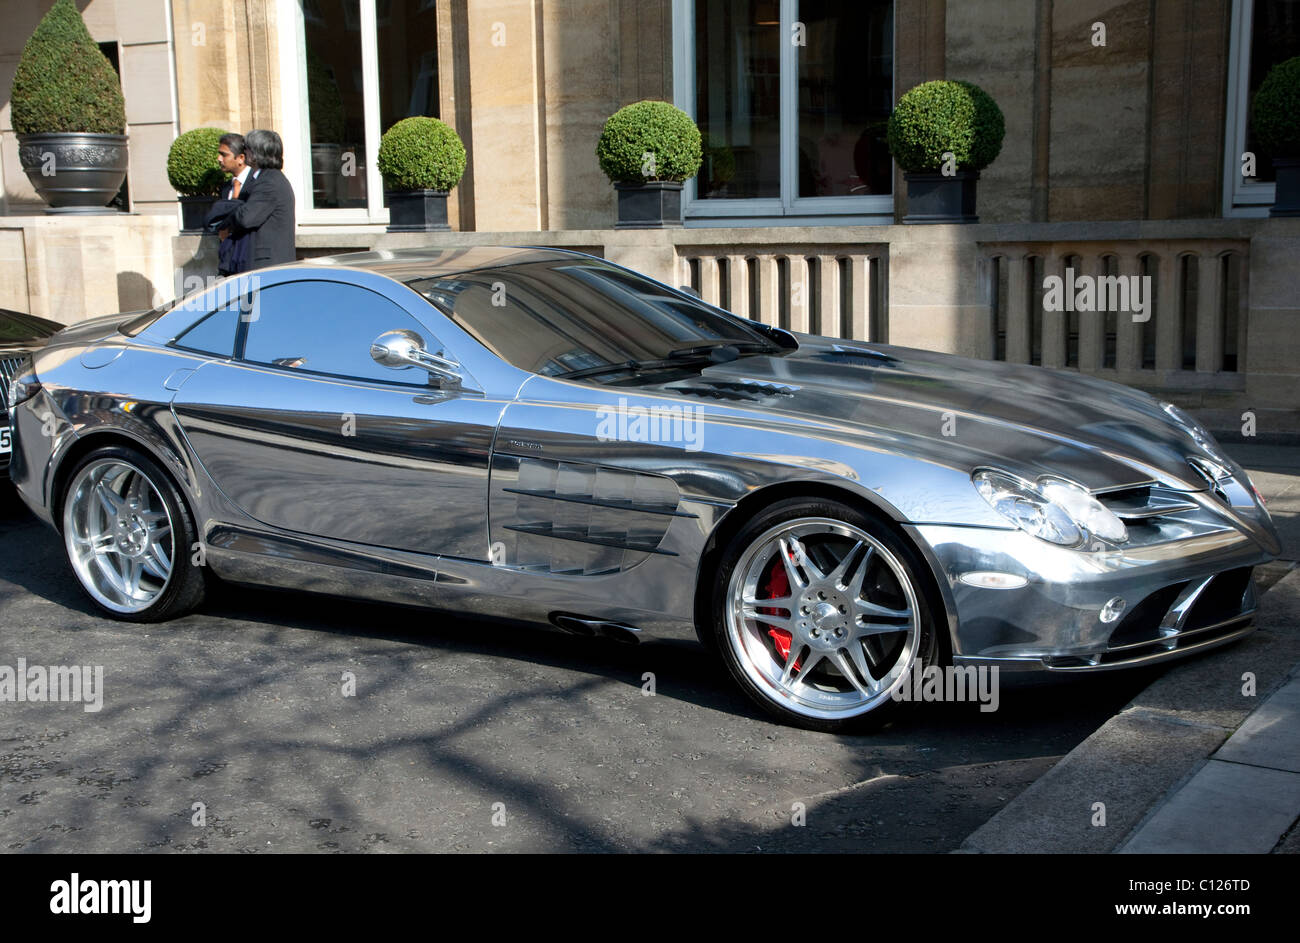 Chrome-plated Mercedes SLR McLaren sports coupe, London Stock Photo